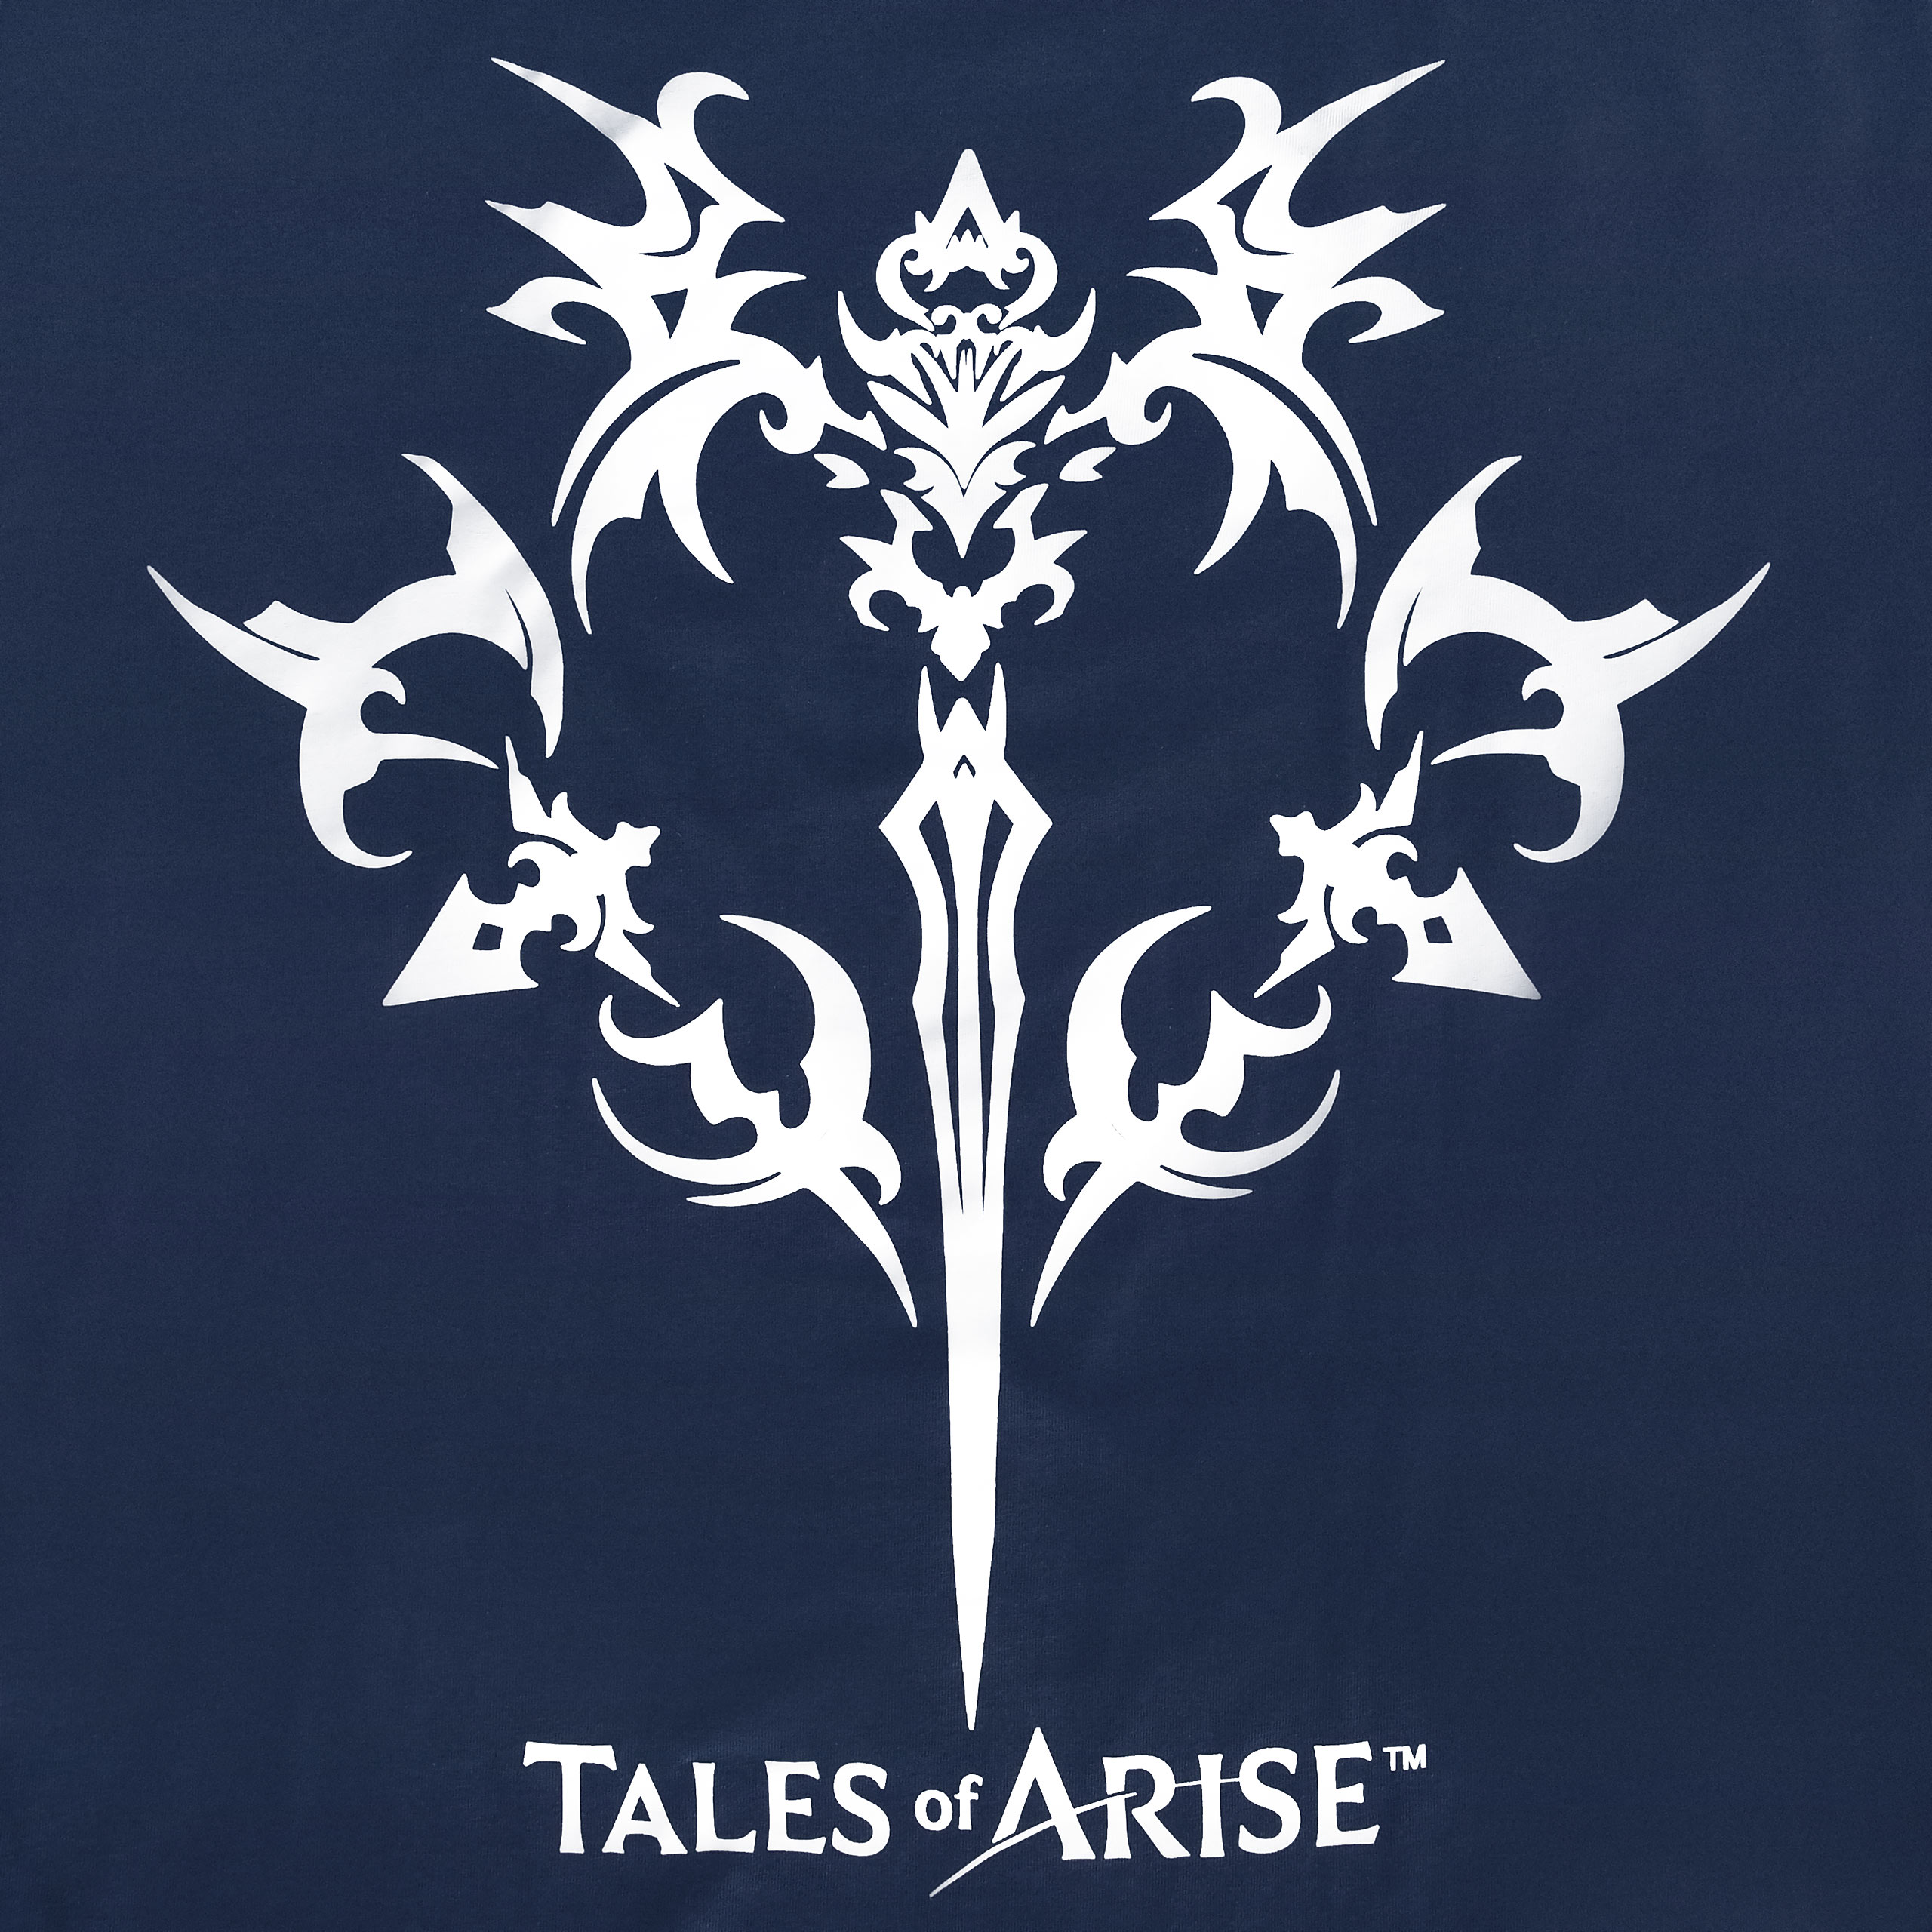 Tales of Arise - Logo T-Shirt blau